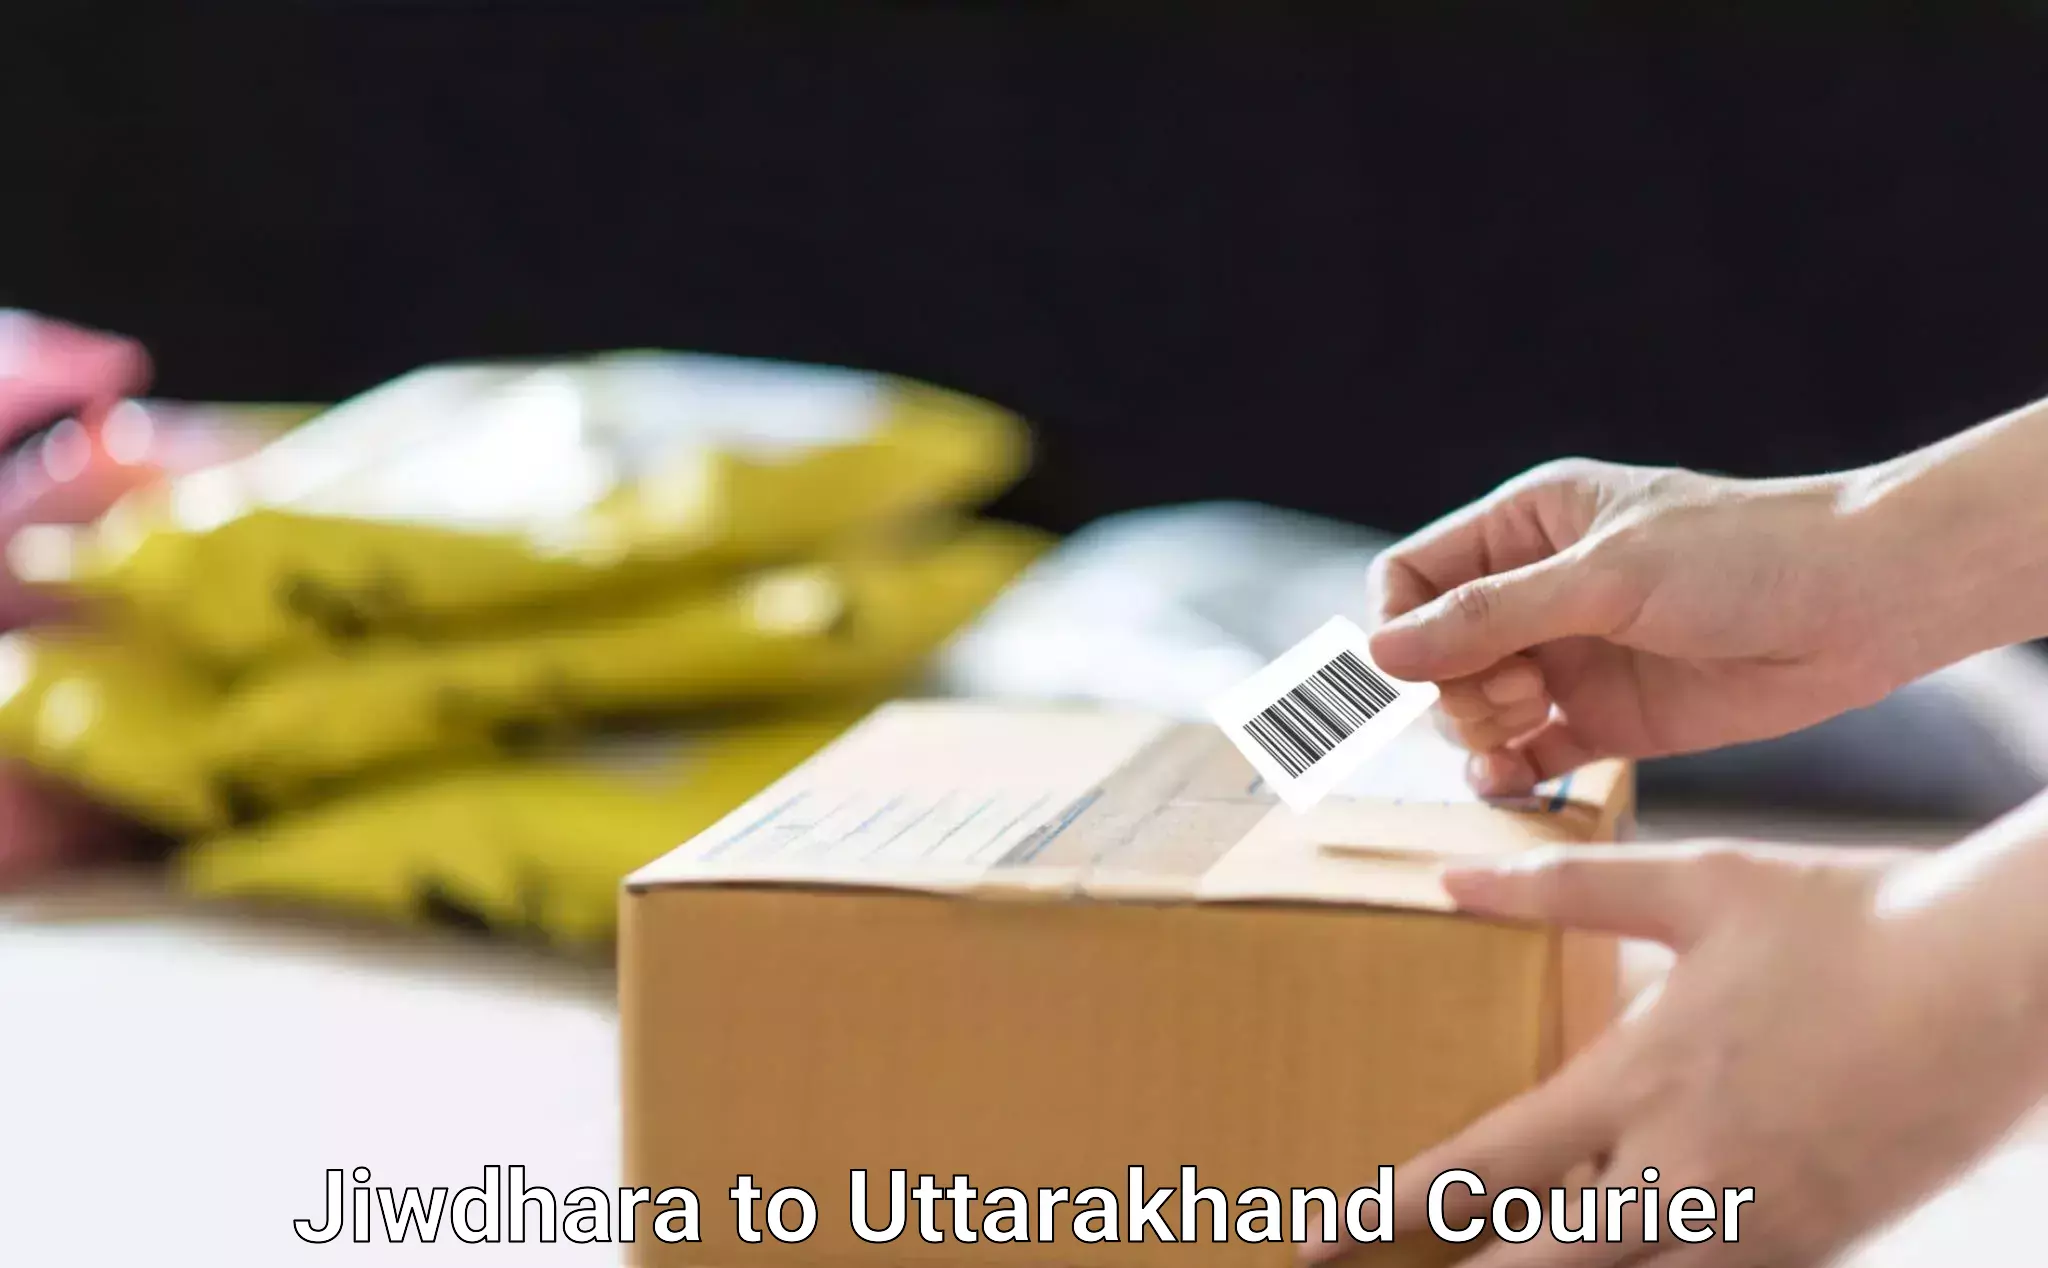 Long-distance moving services Jiwdhara to Uttarakhand